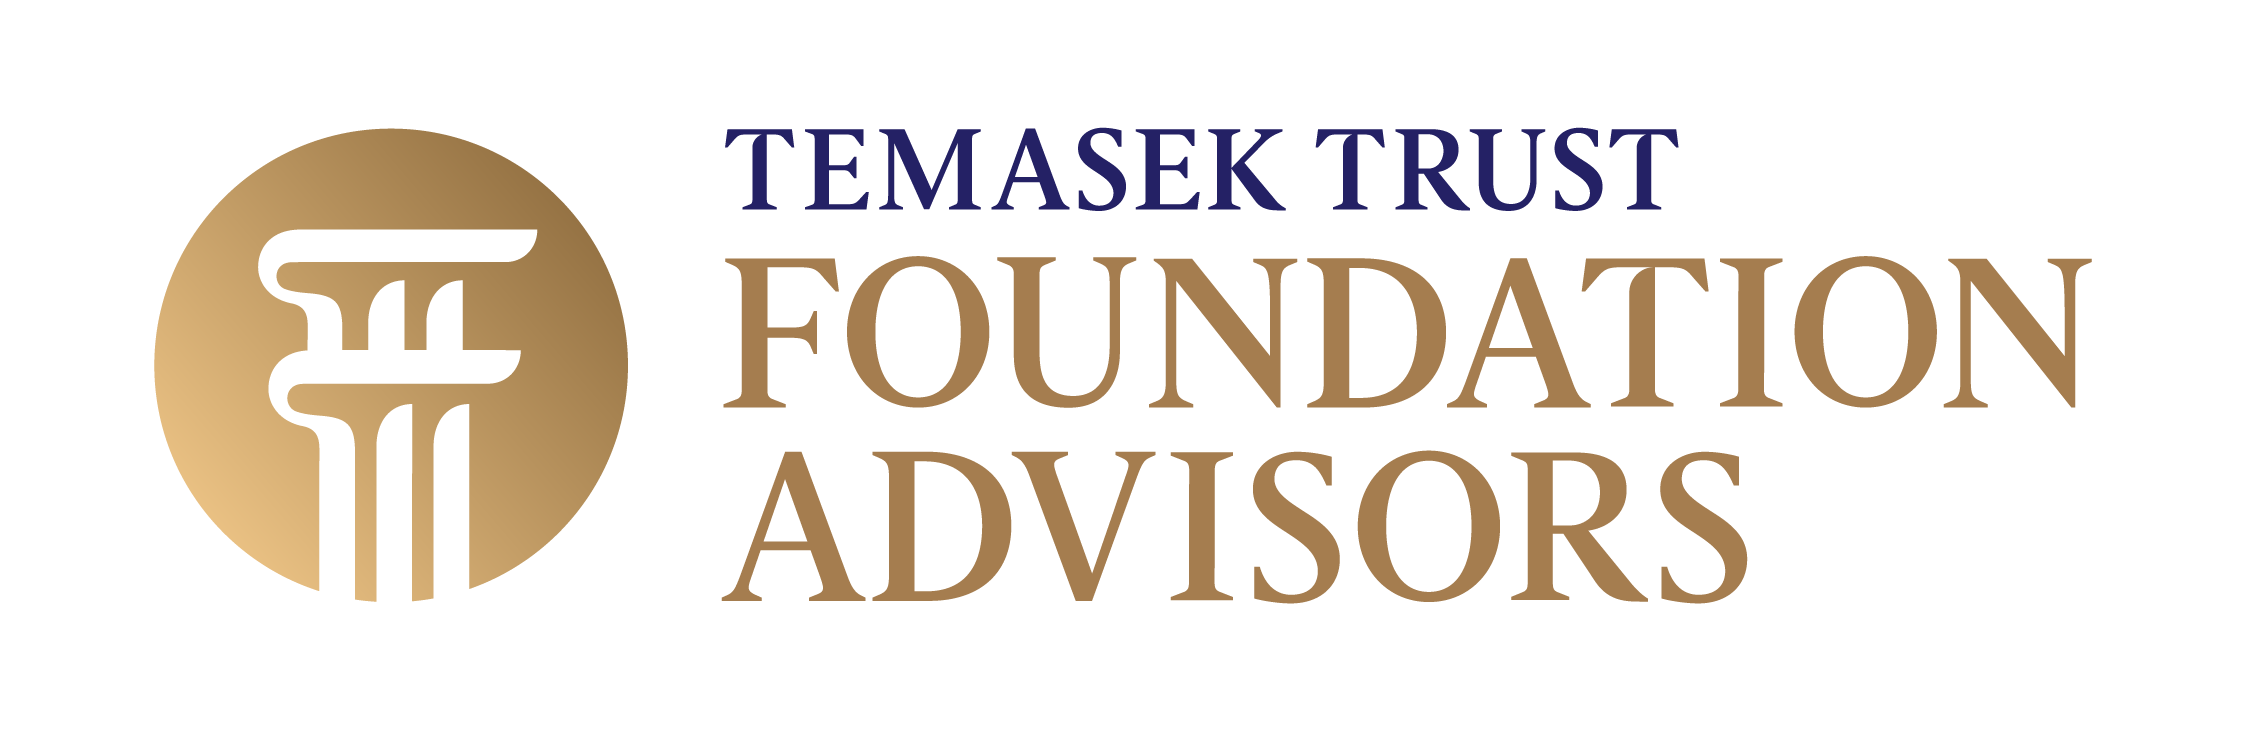 Temasek Trust Foundation Advisors